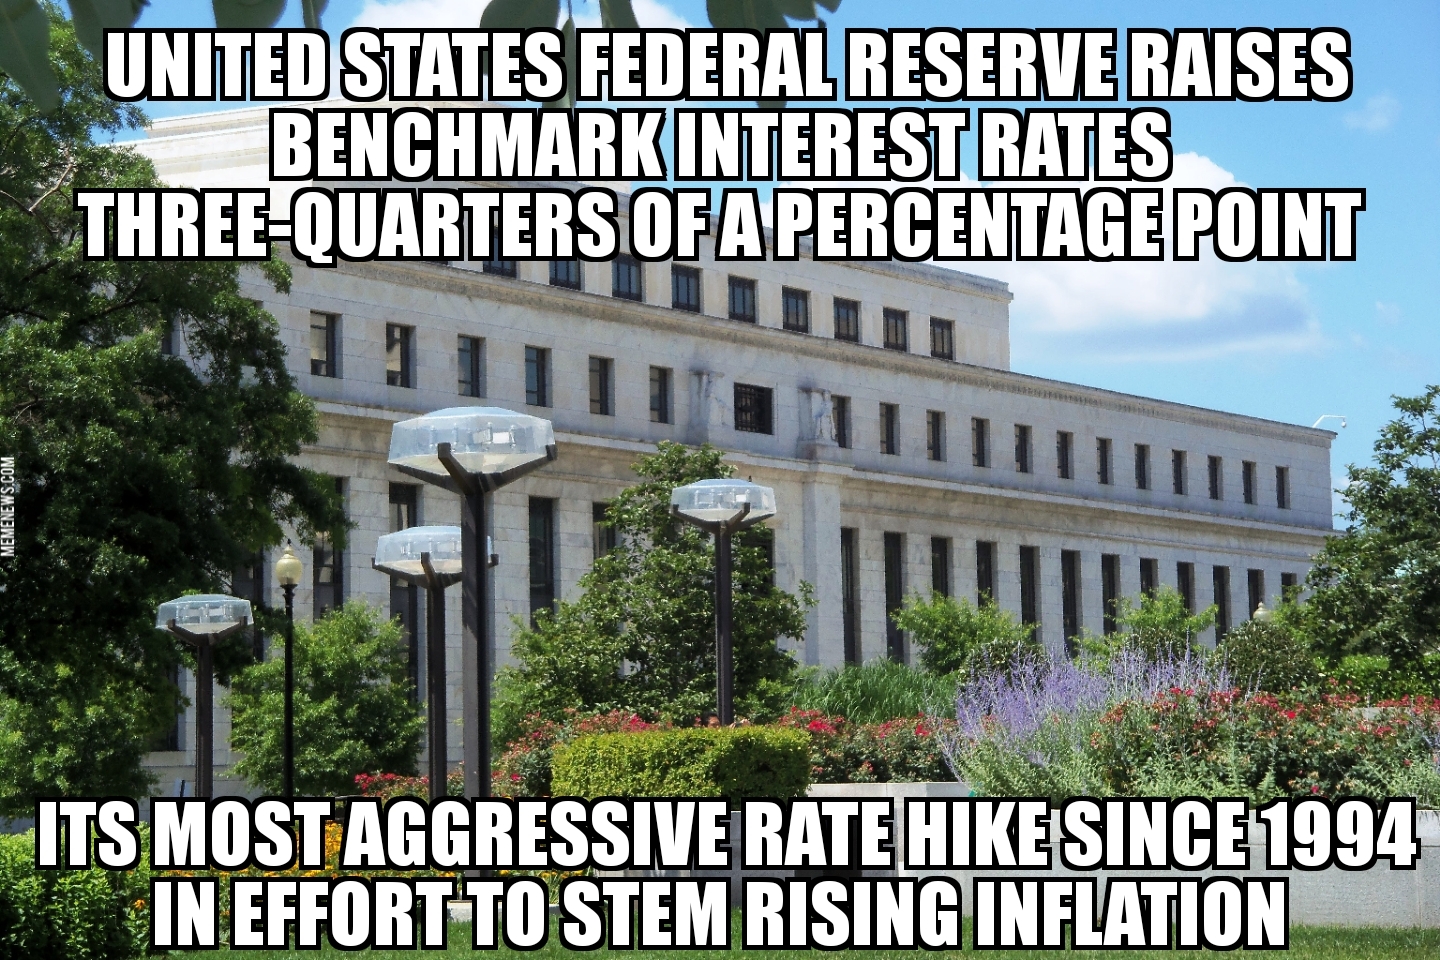 Fed raises interest rates .75%